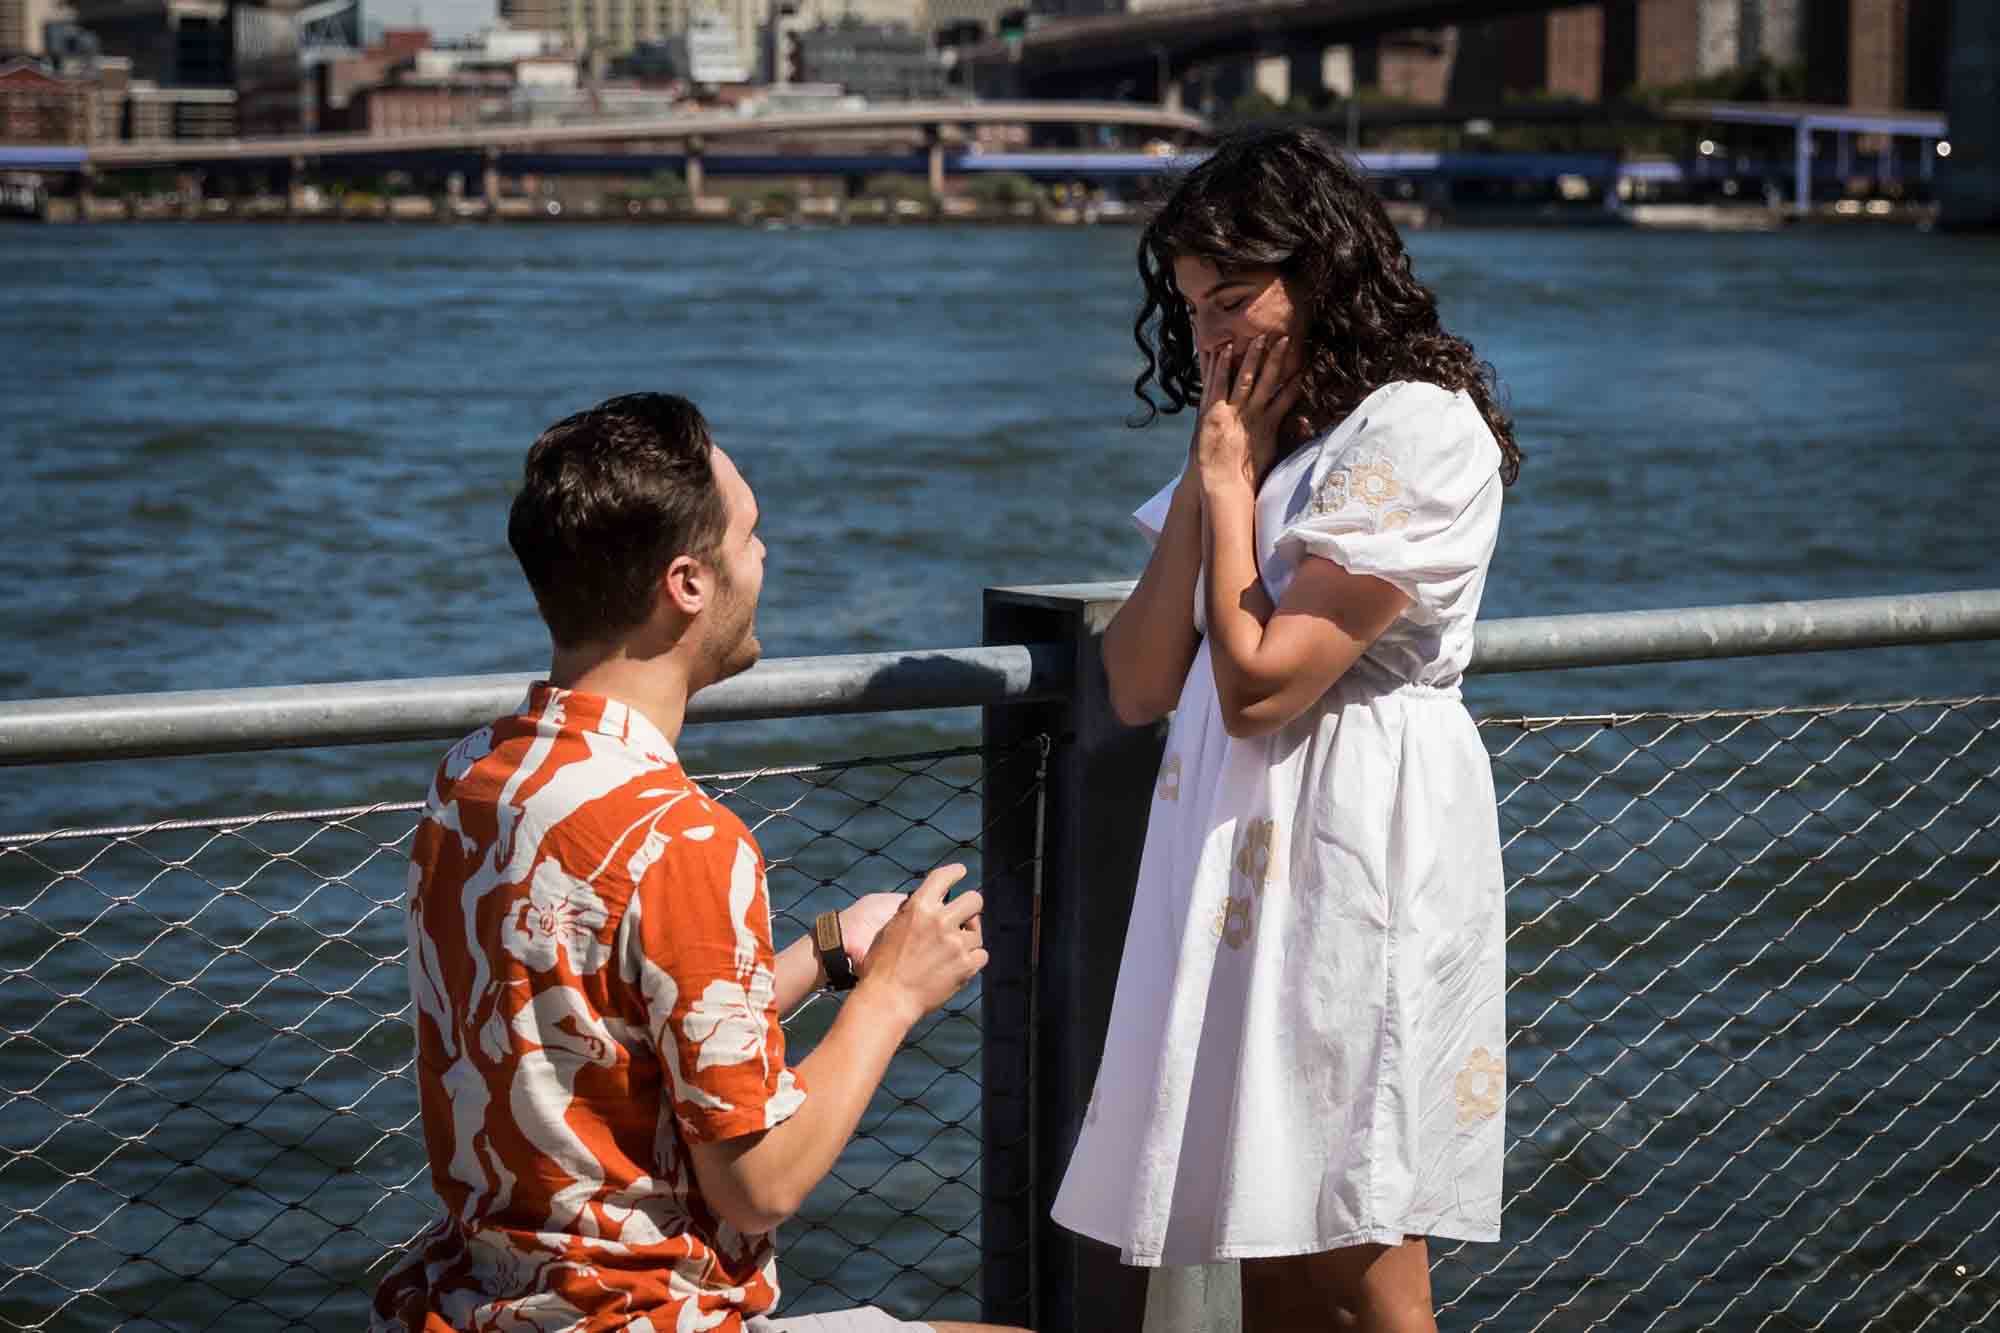 Man on one knee proposing in front of waterfront in Brooklyn Bridge Park